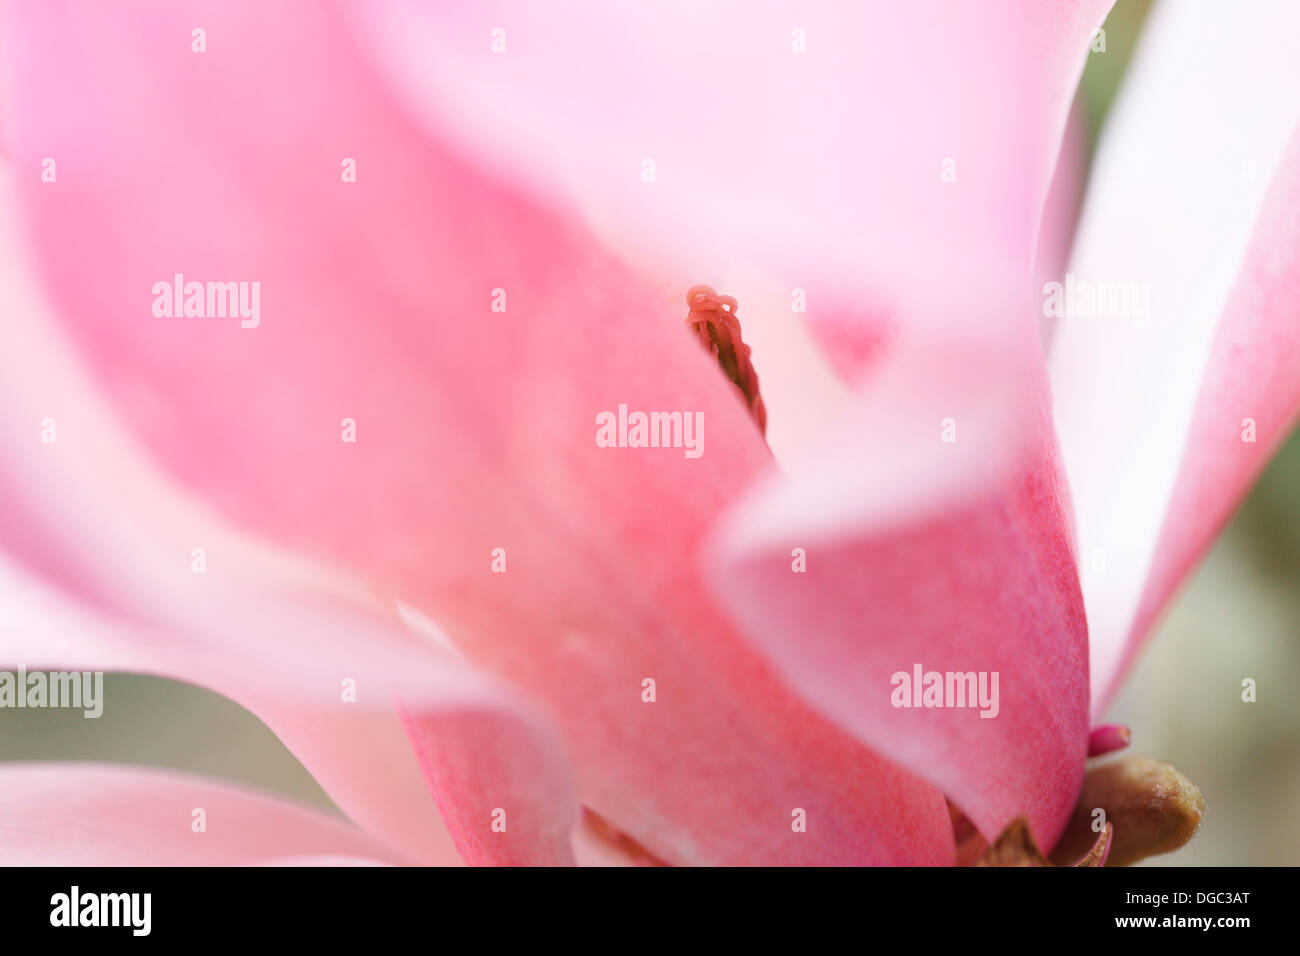 exquisite magnolia sprengeri pink bloom, gentle and ethereal  Jane Ann Butler Photography  JABP1080 Stock Photo